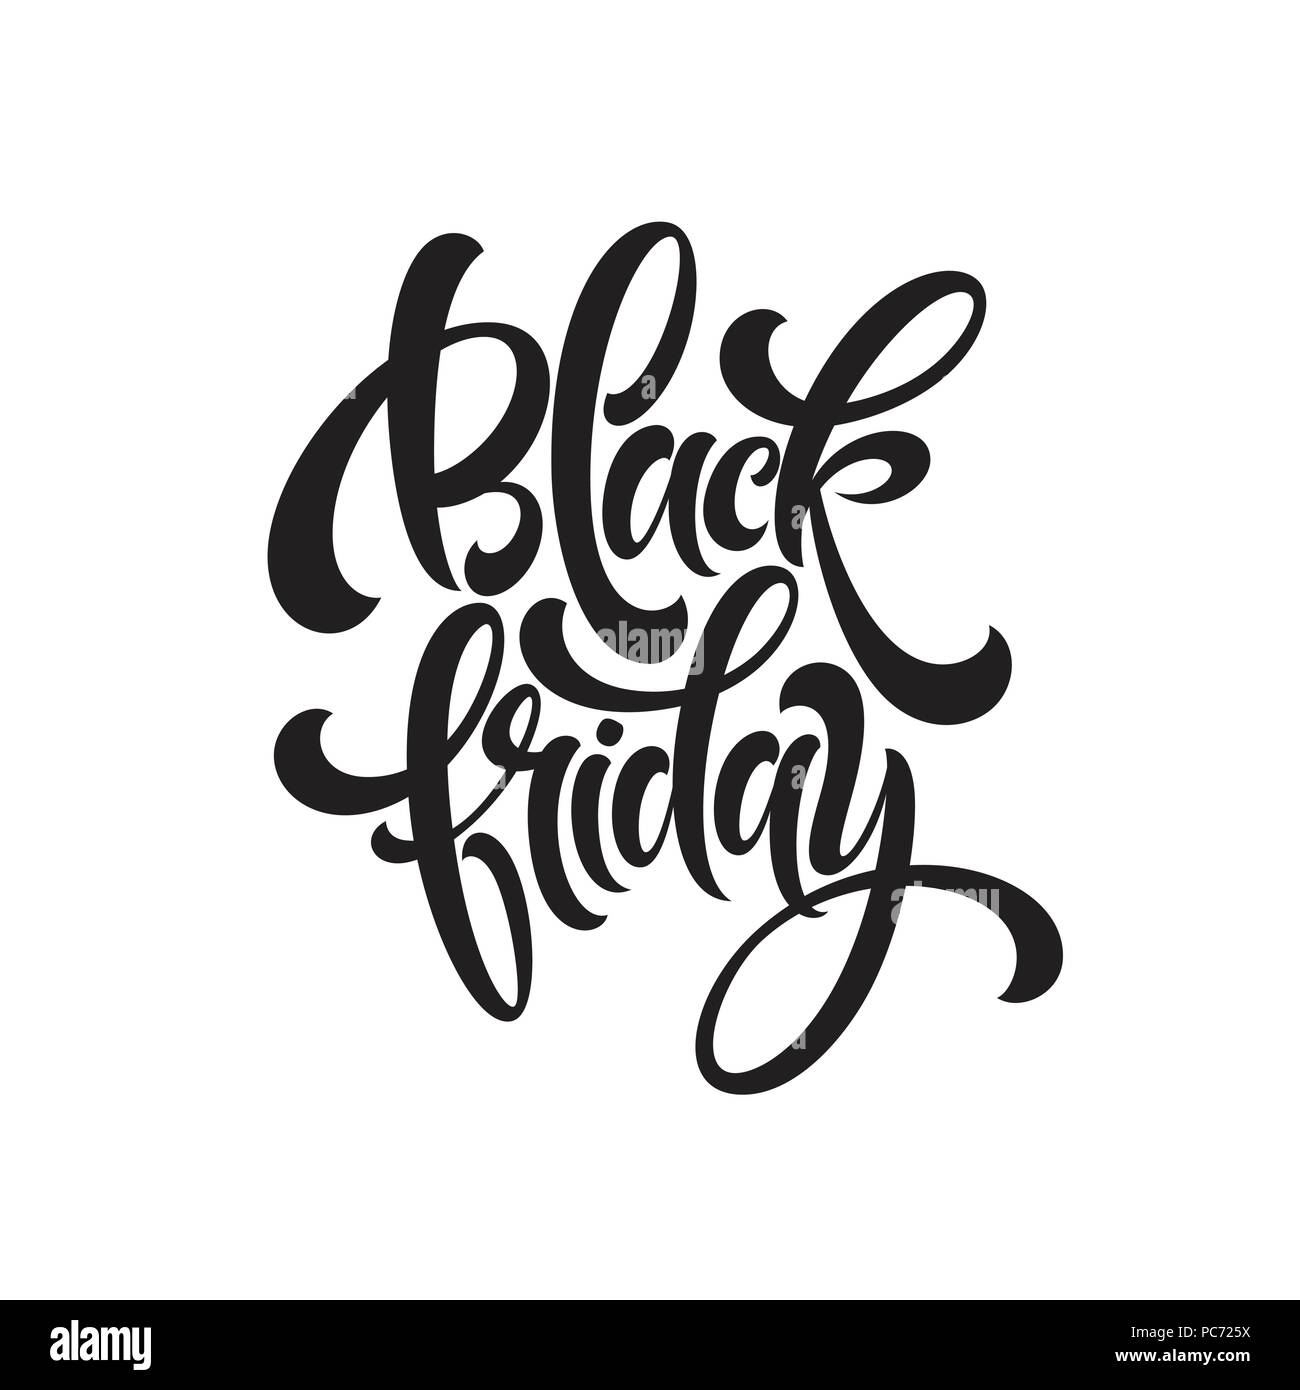 Black Friday Sale handmade lettering, calligraphy. Vector illustration Stock Vector